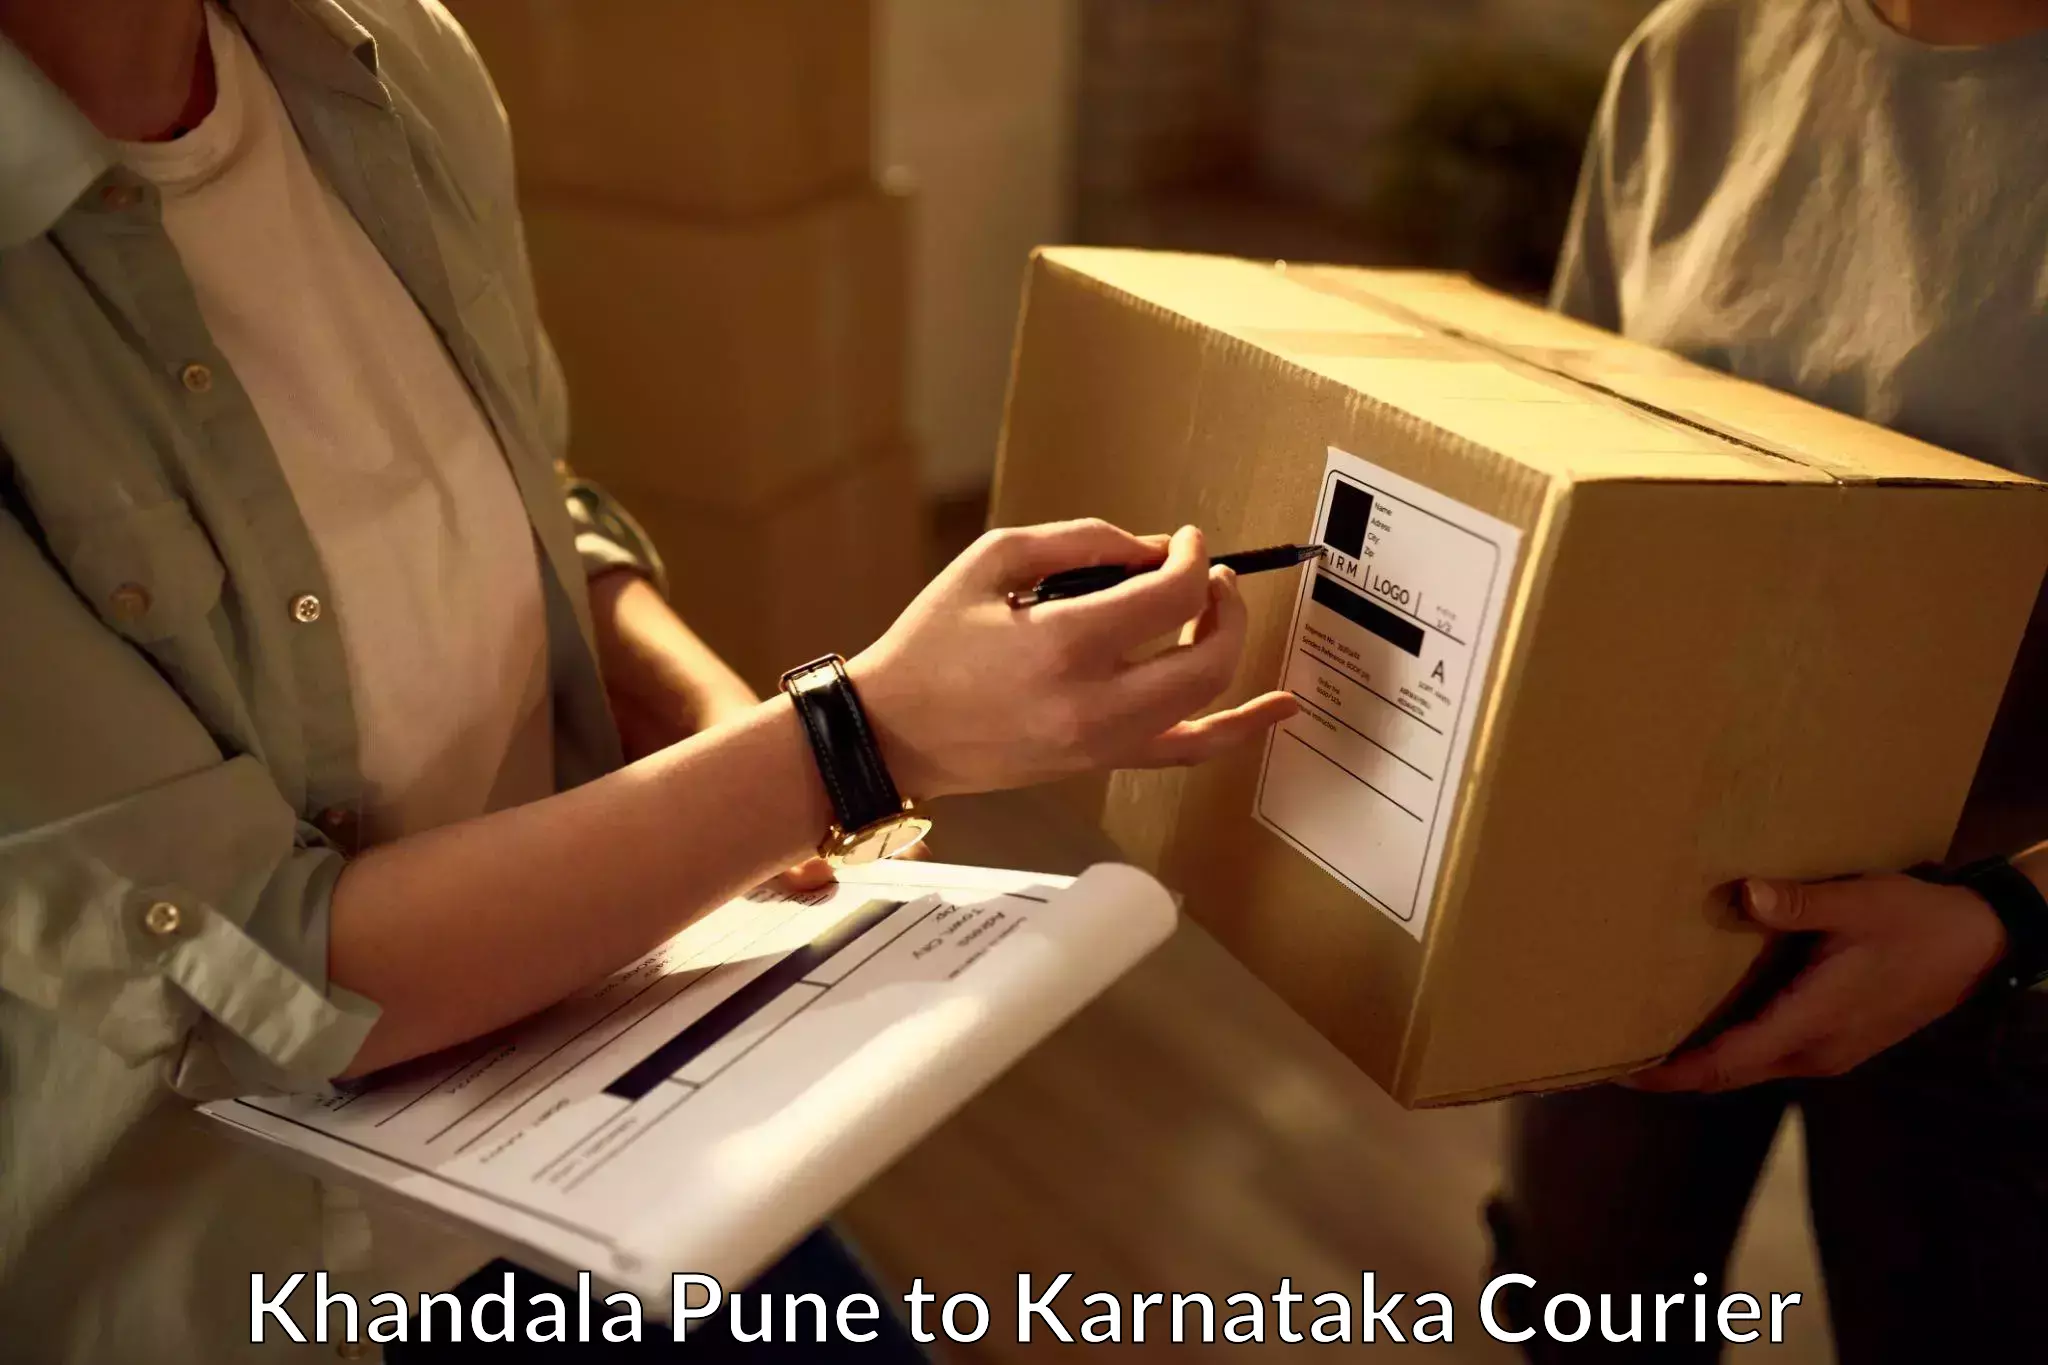 Courier service comparison in Khandala Pune to Jamkhandi